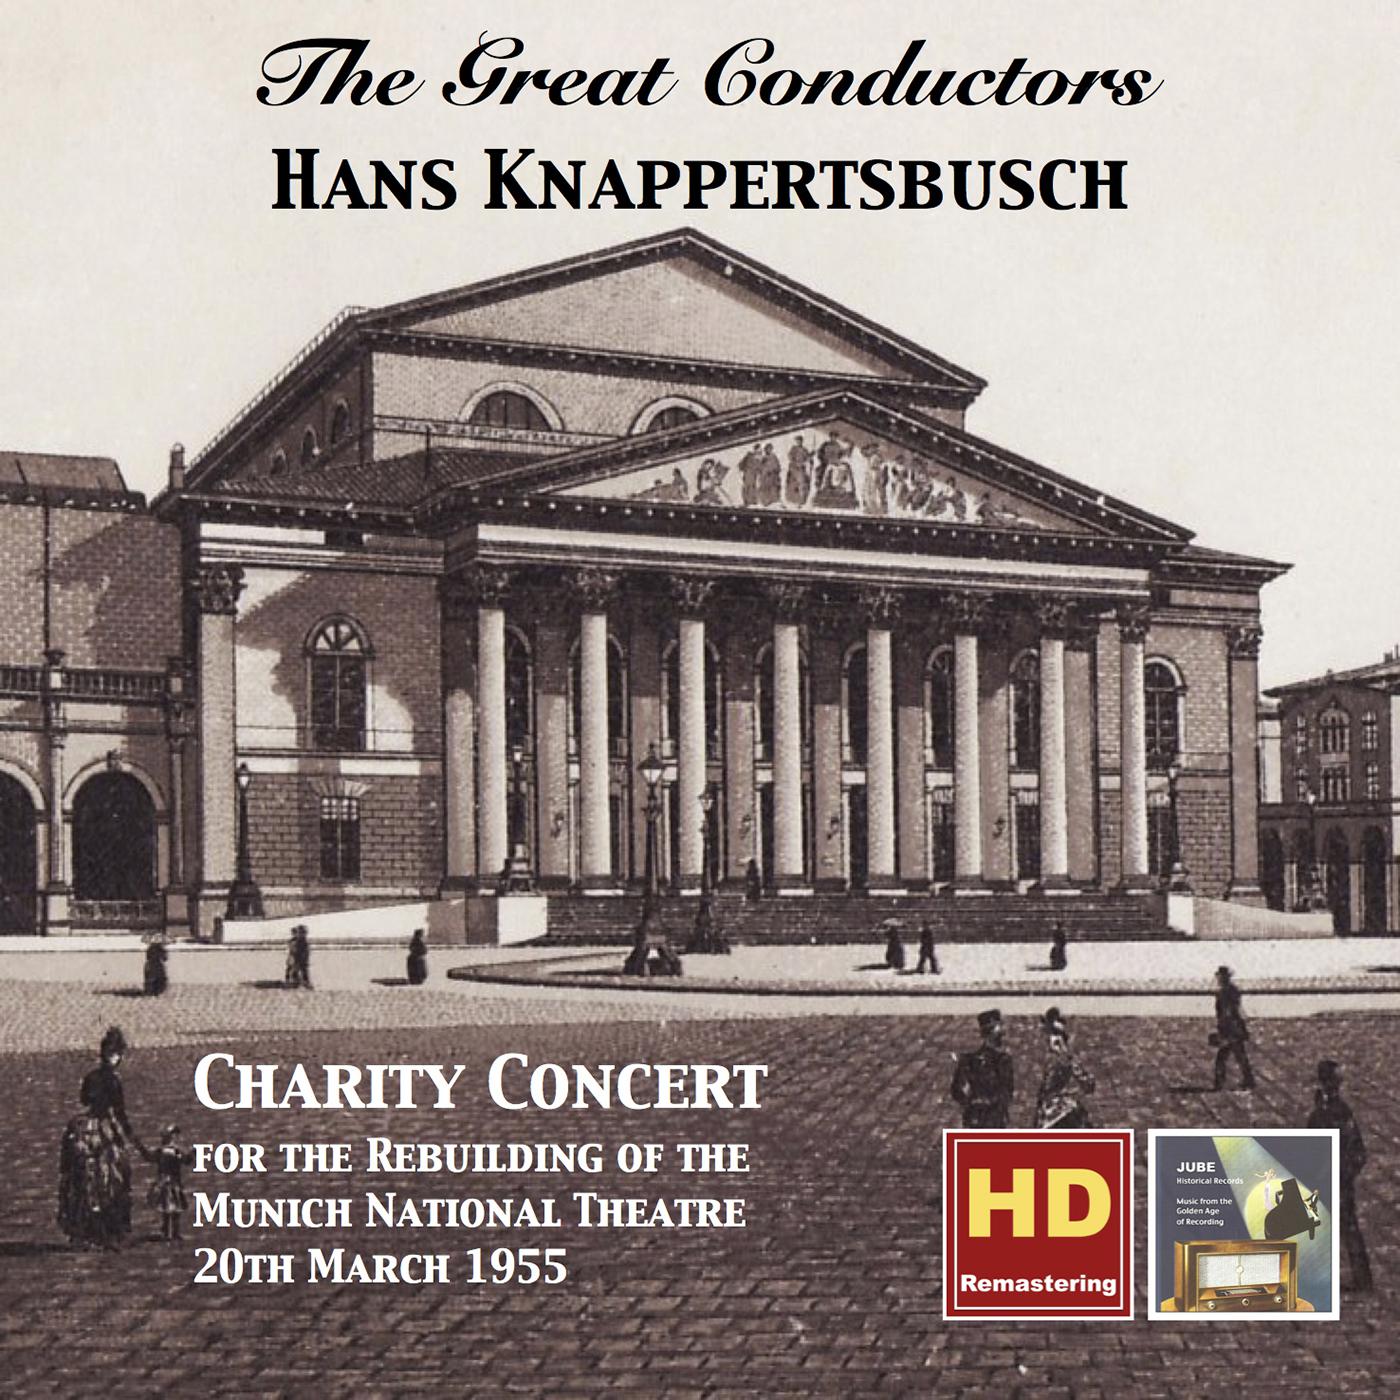 GREAT CONDUCTORS (THE) - Hans Knappertsbusch (155-1957)